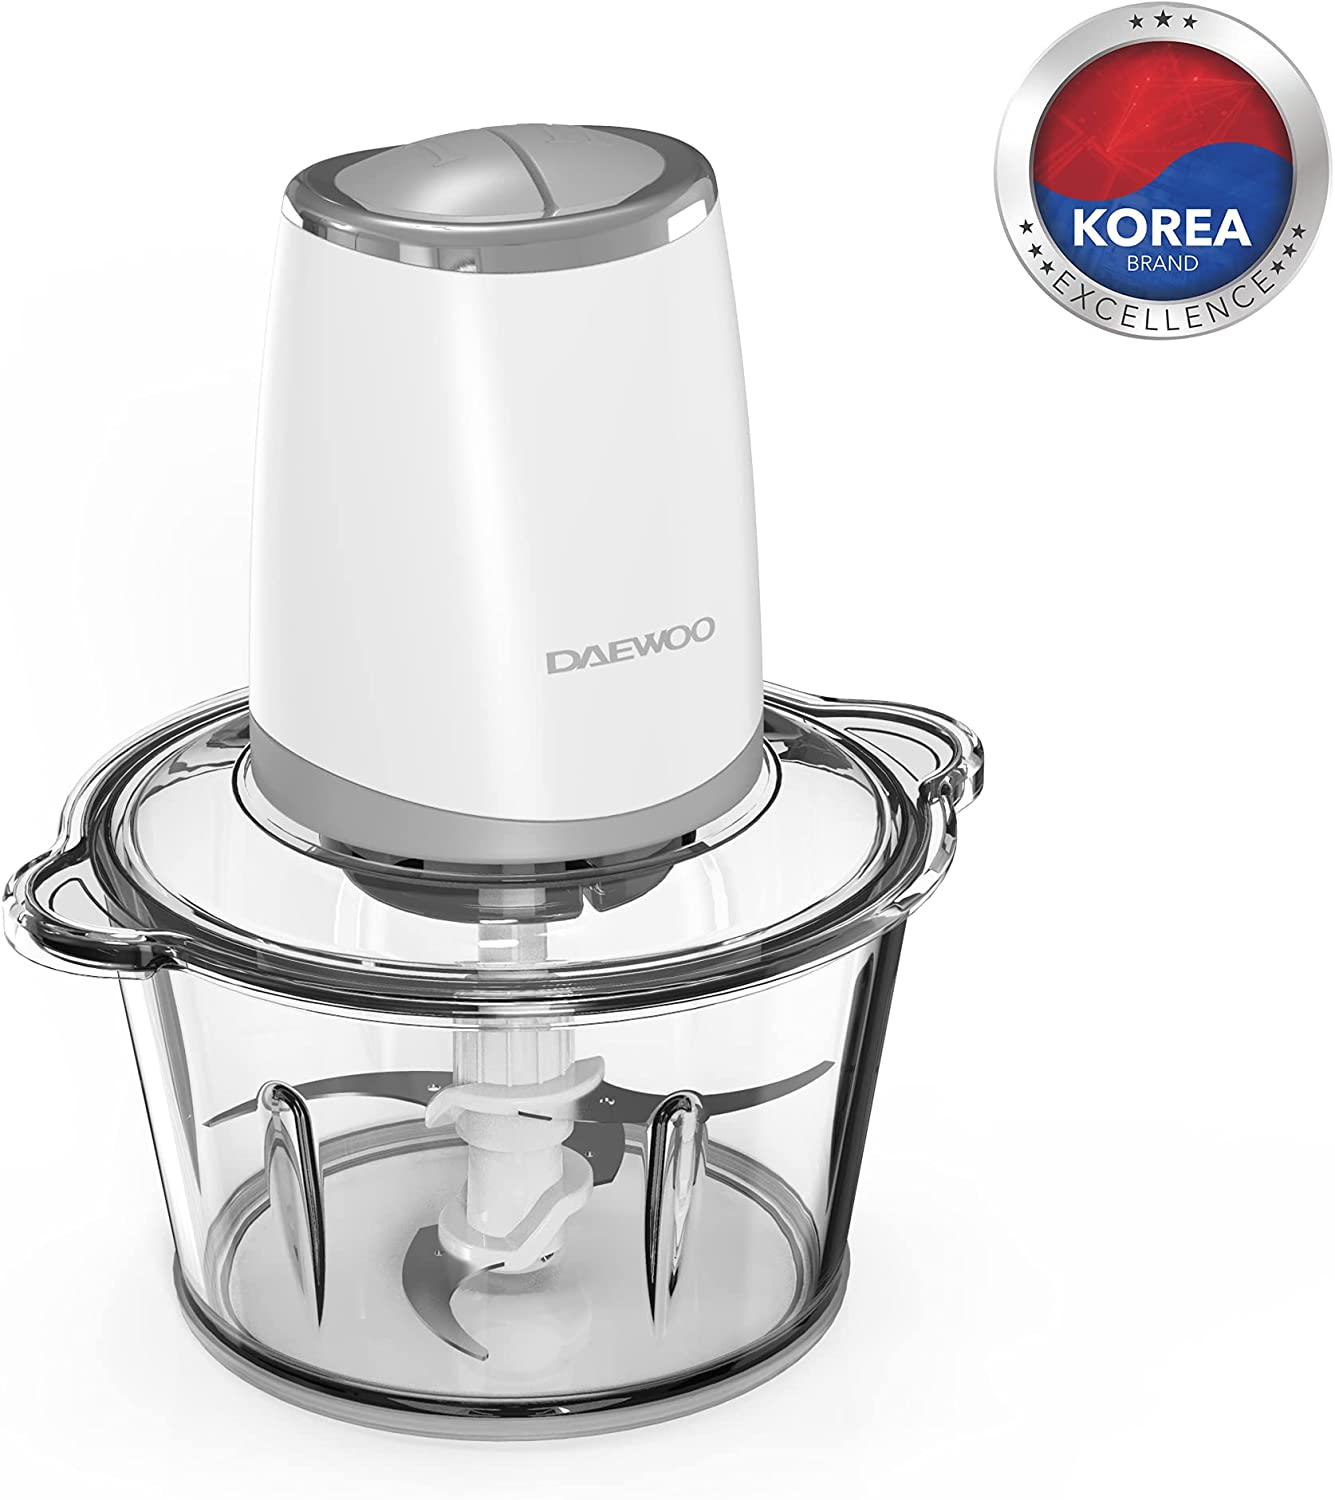 Daewoo 500W 1.8L Food Chopper with Glass Bowl, Quad Blade, Mincer & Grinder Function Korean Technology DFC2052 White